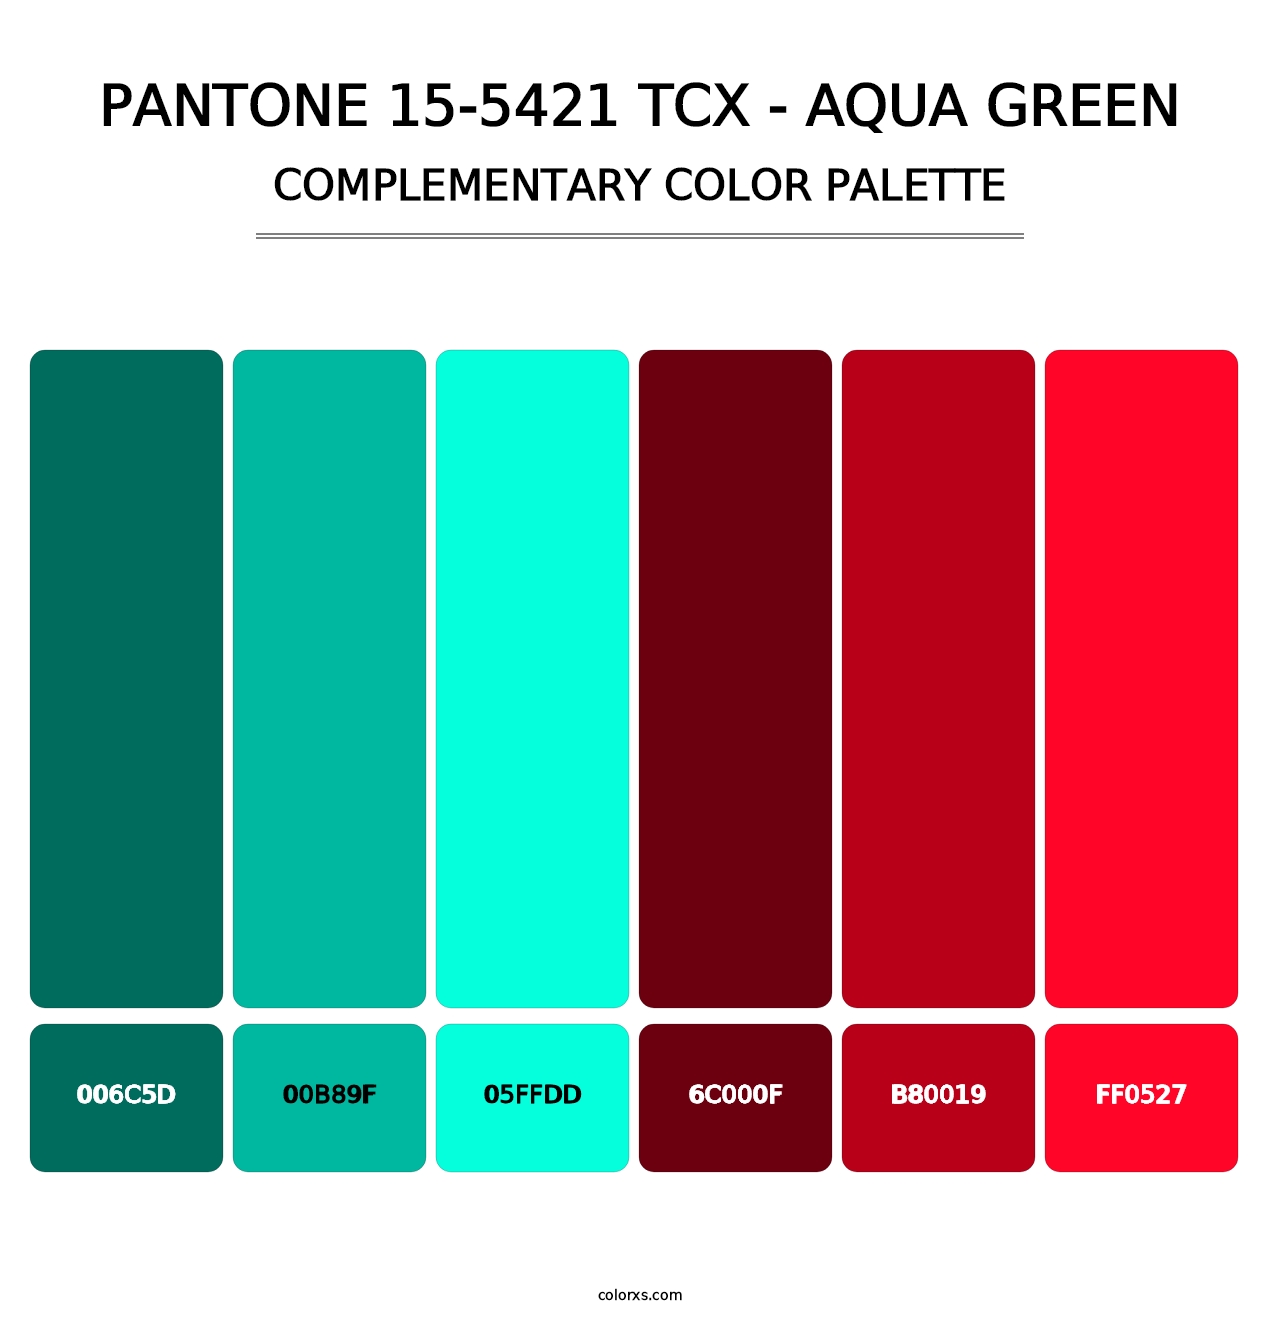 PANTONE 15-5421 TCX - Aqua Green - Complementary Color Palette